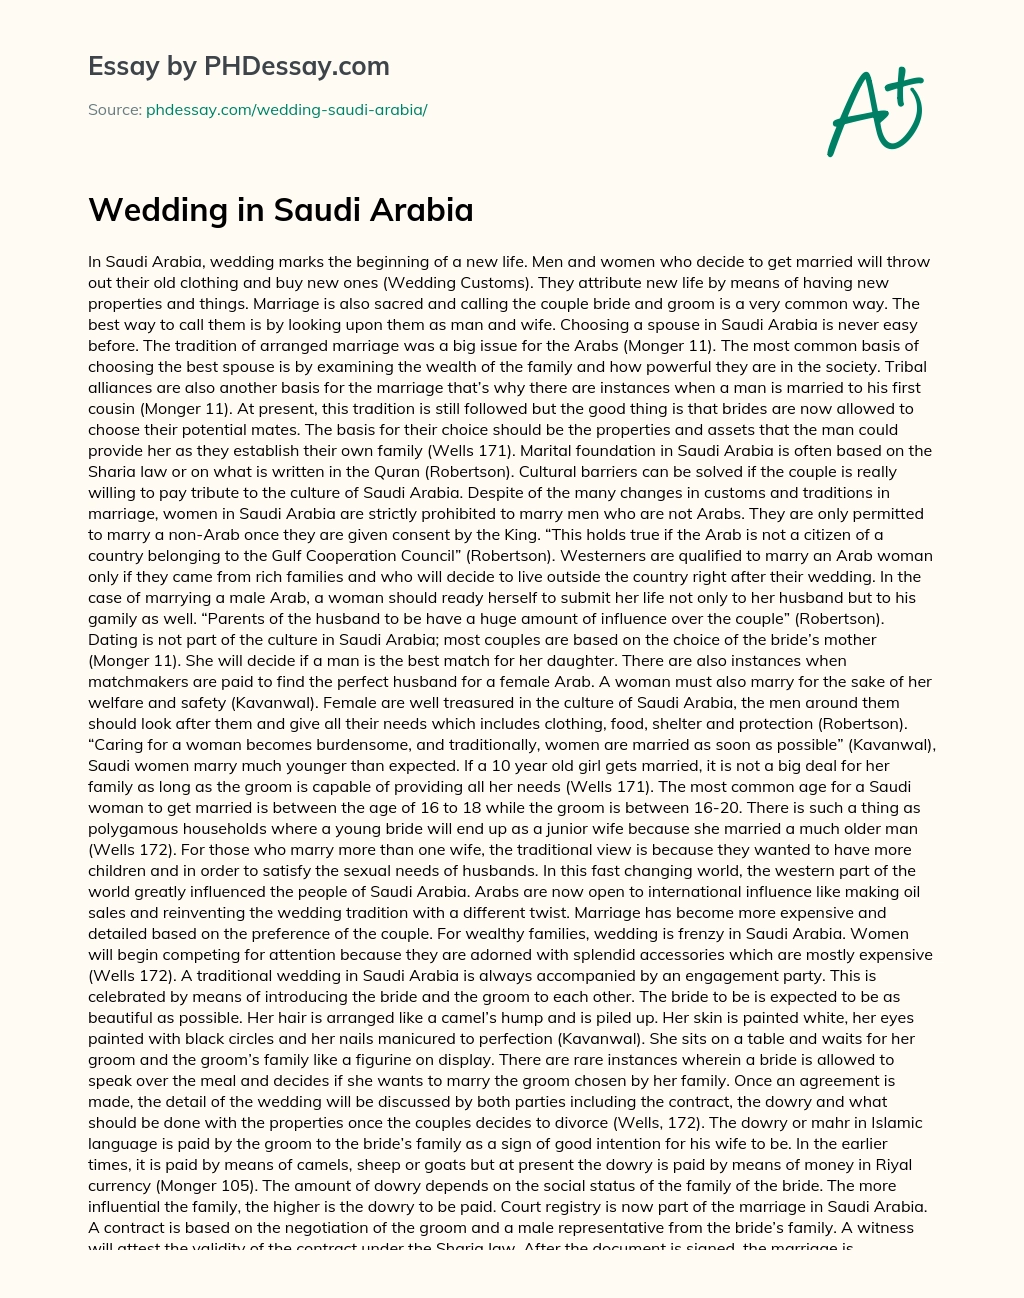 Wedding in Saudi Arabia essay